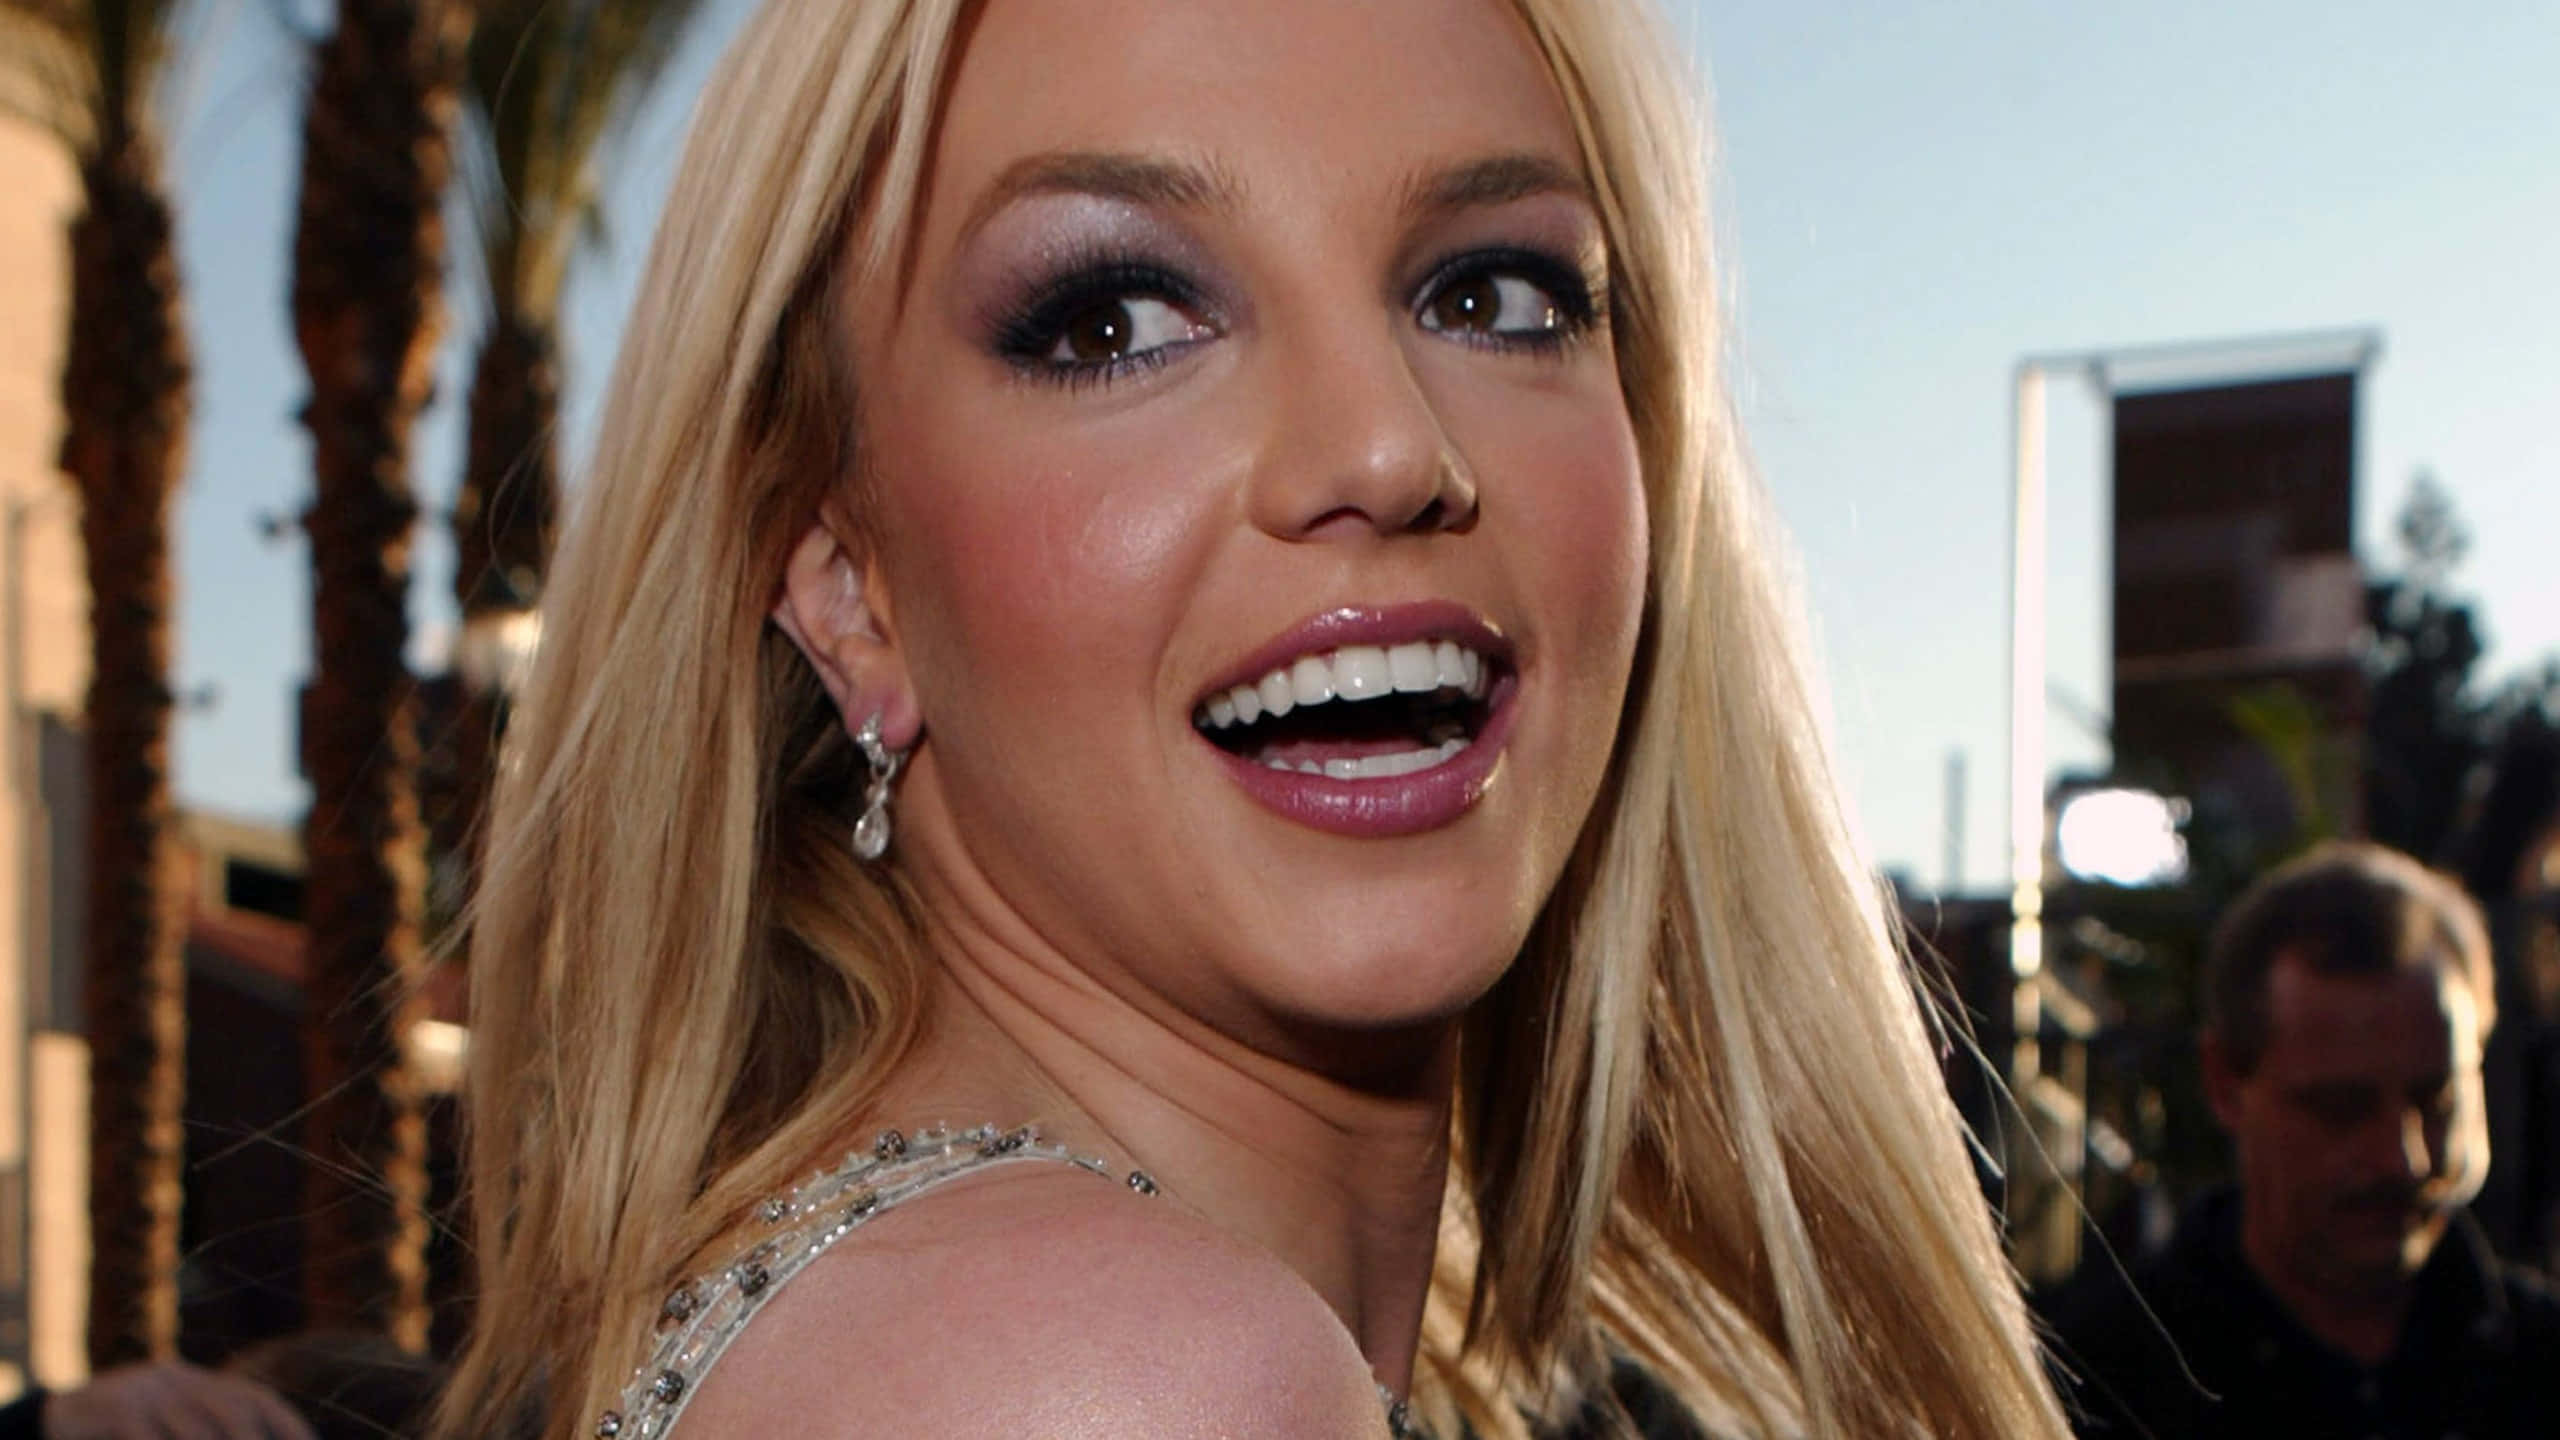 Pop star Britney Spears looks radiant in her white dress